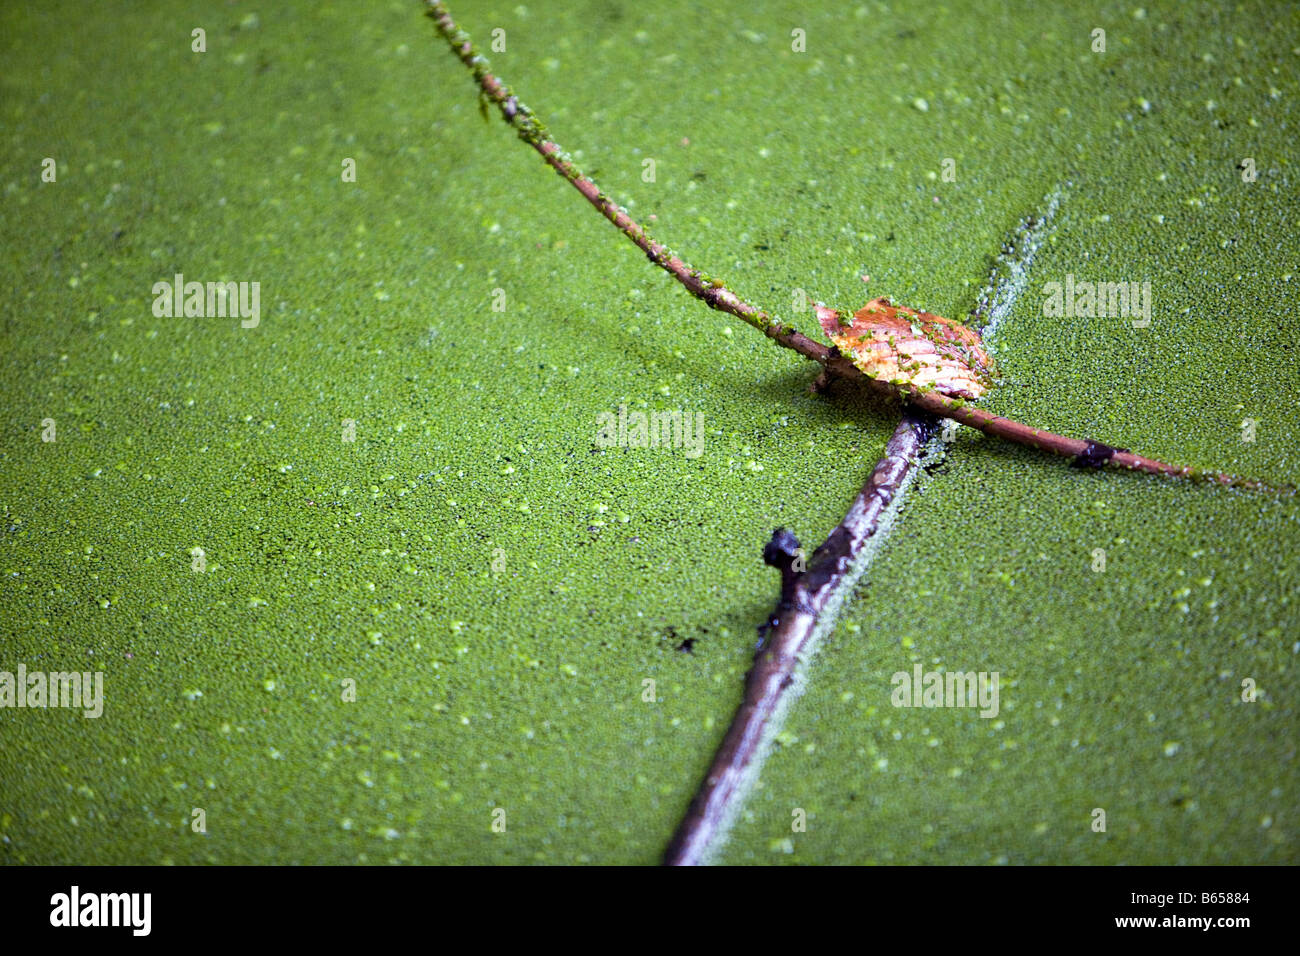 Sticks floating among duckweed on a pond Stock Photo